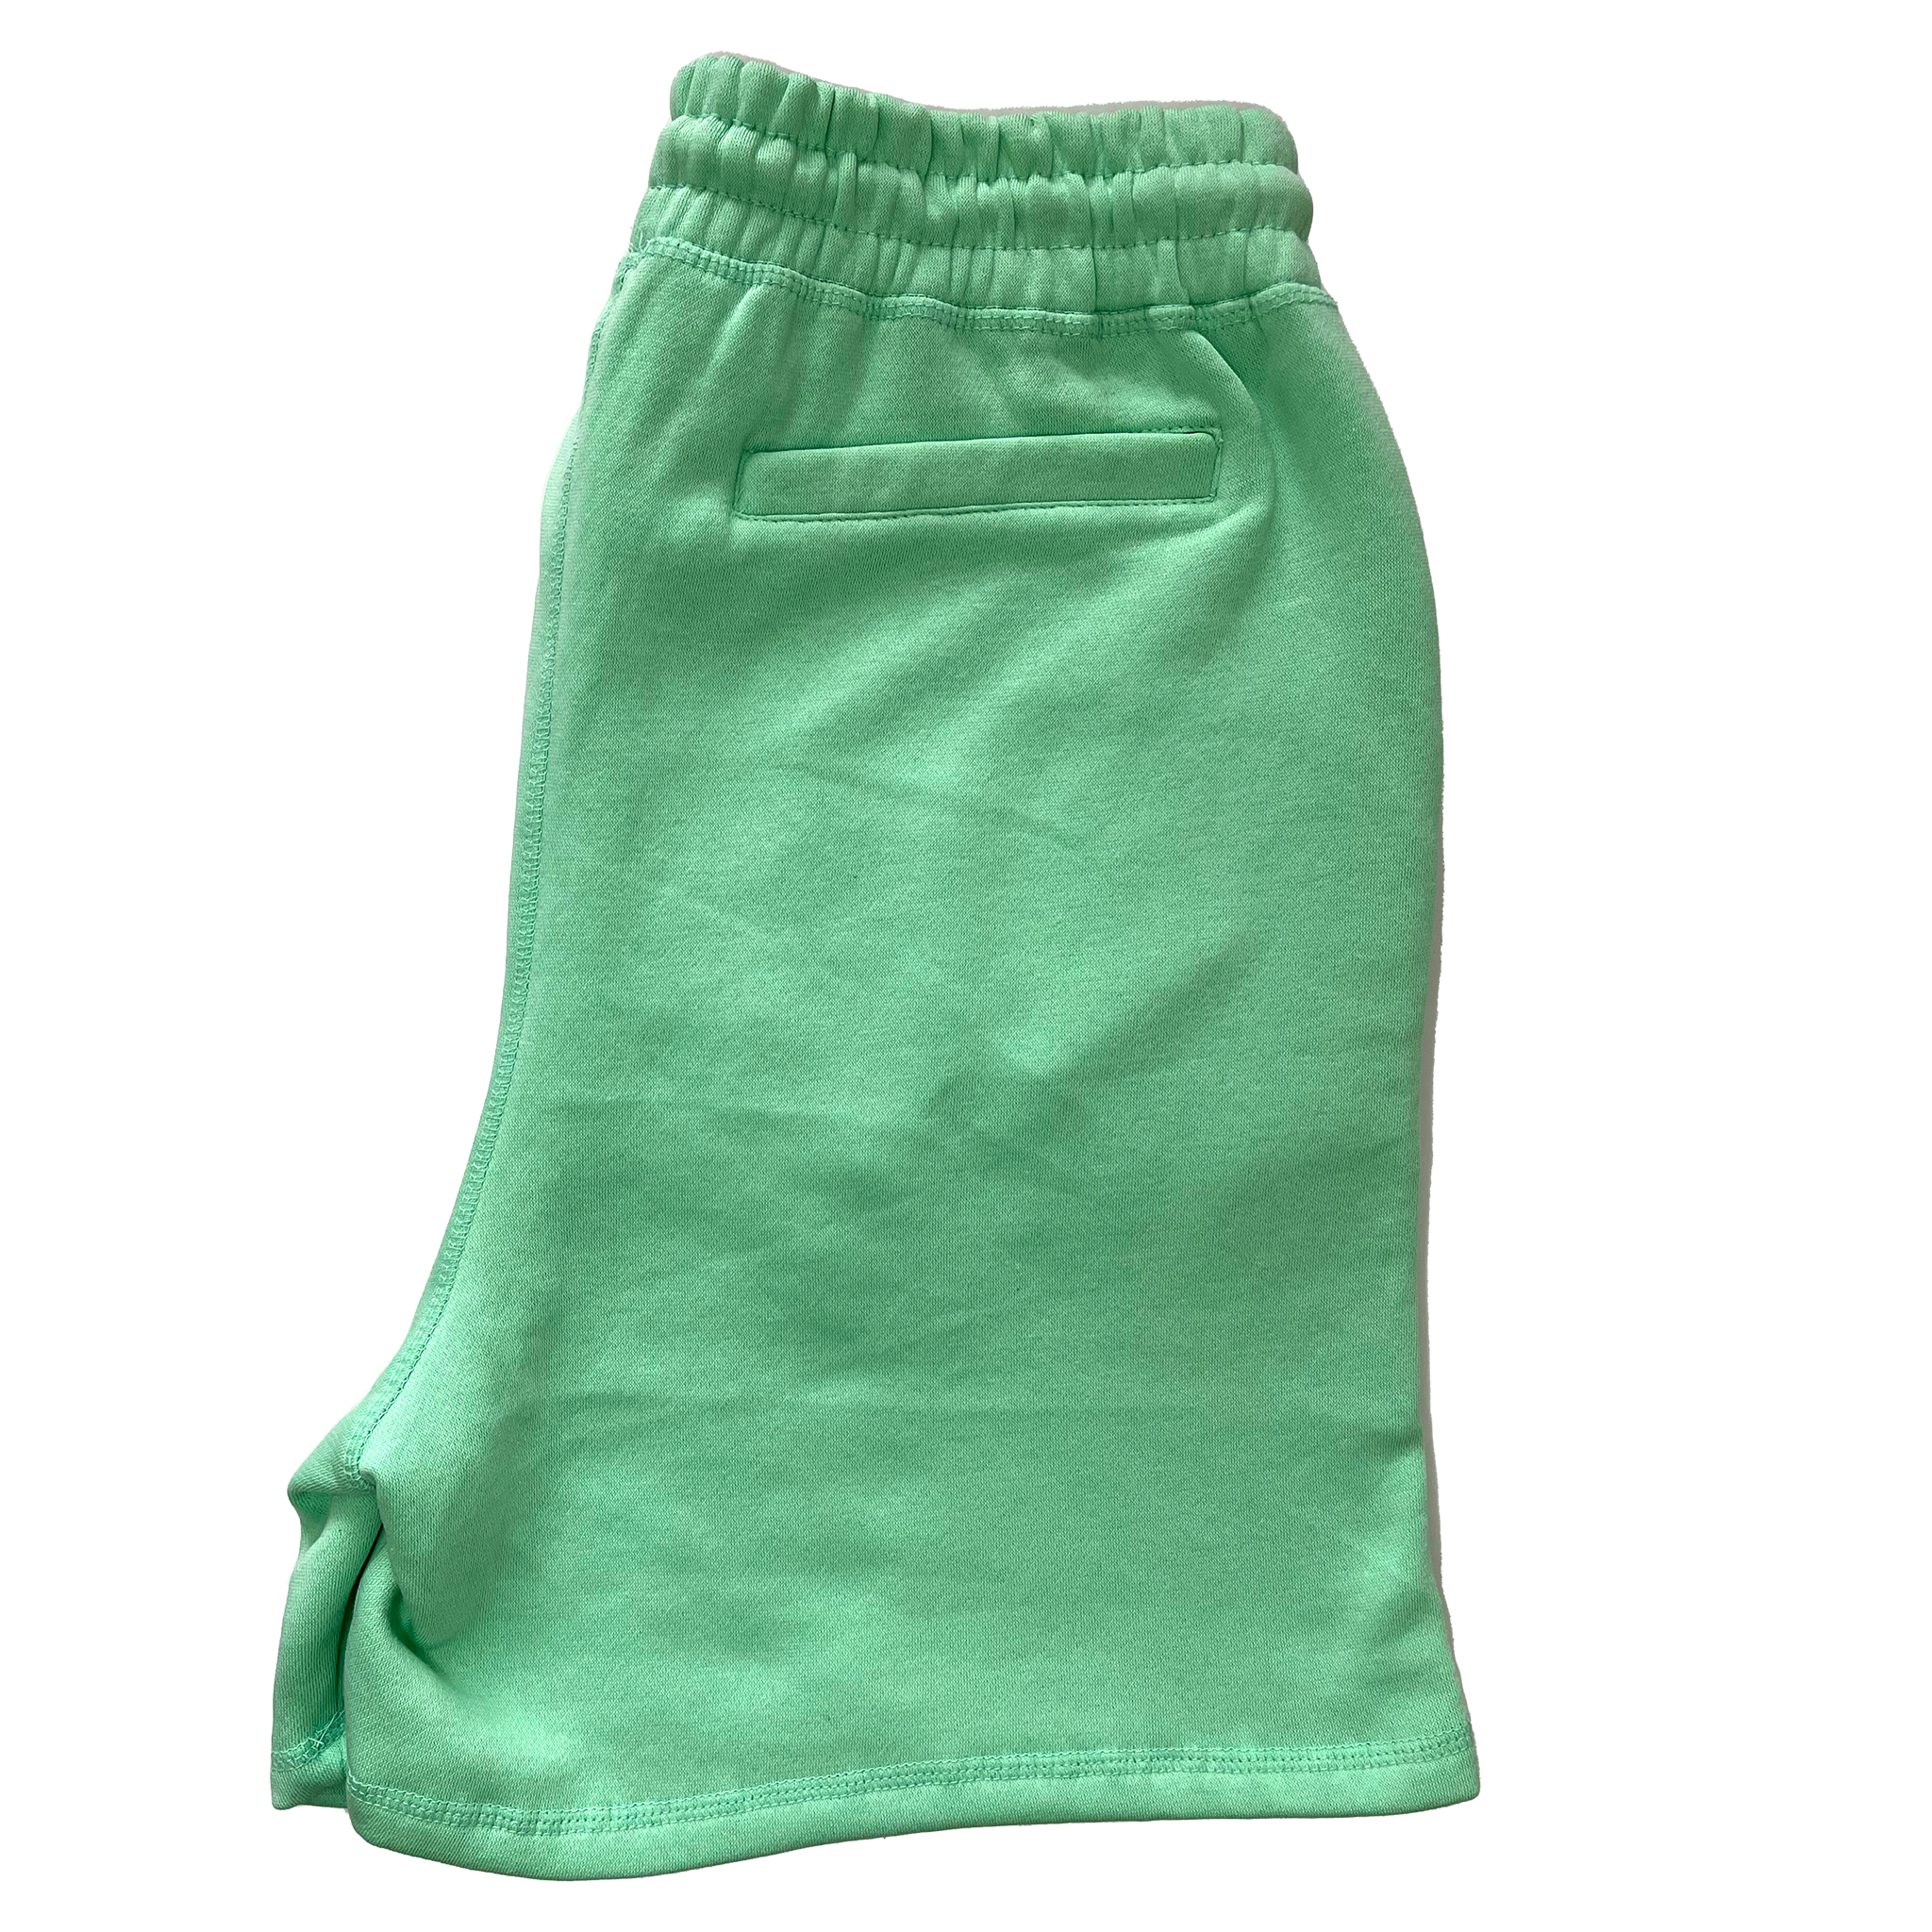 Back pocket view of Mint Hustle Shorts